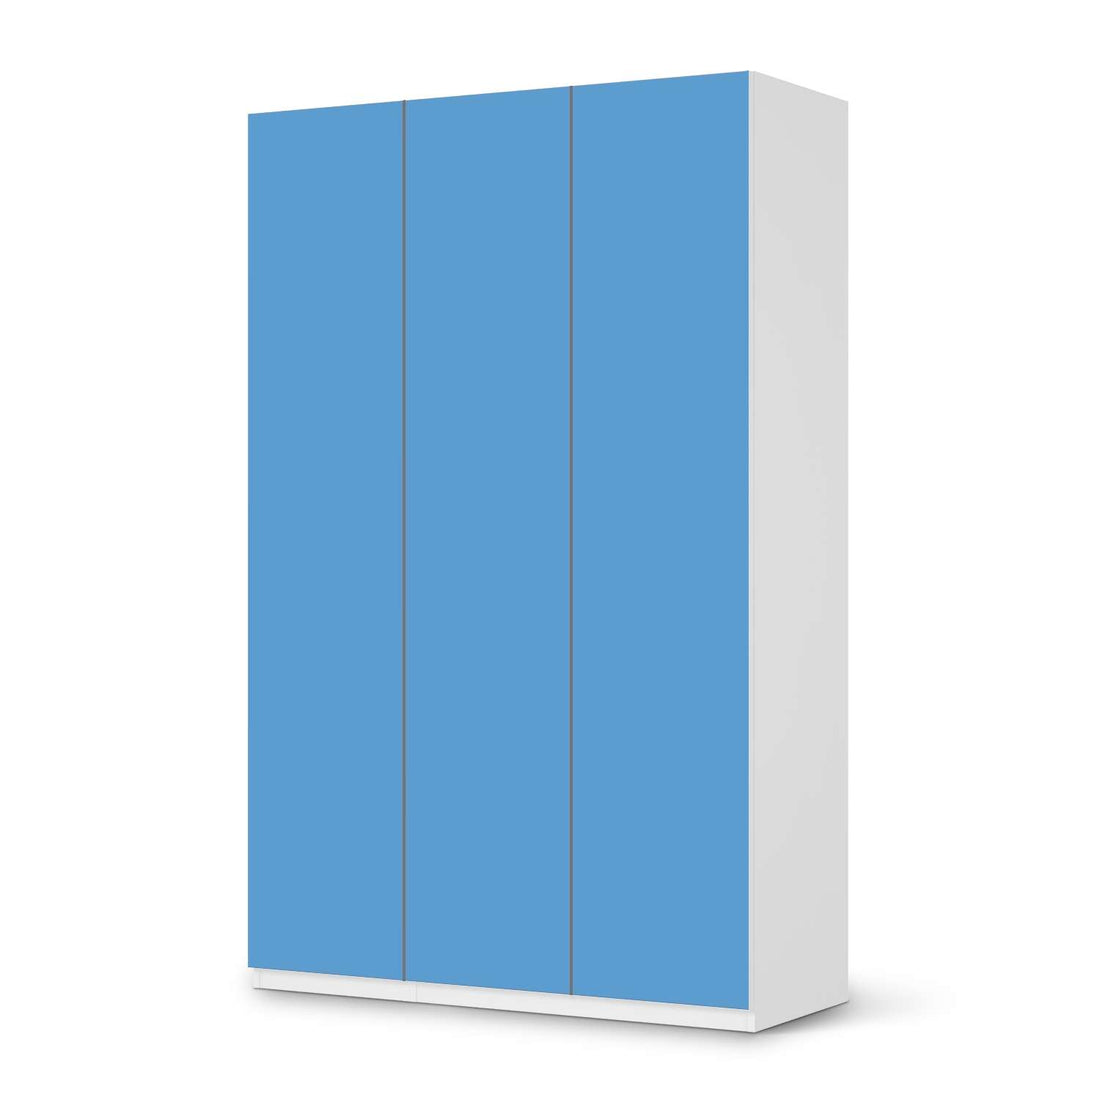 Selbstklebende Folie Blau Light - IKEA Pax Schrank 236 cm Höhe - 3 Türen - weiss